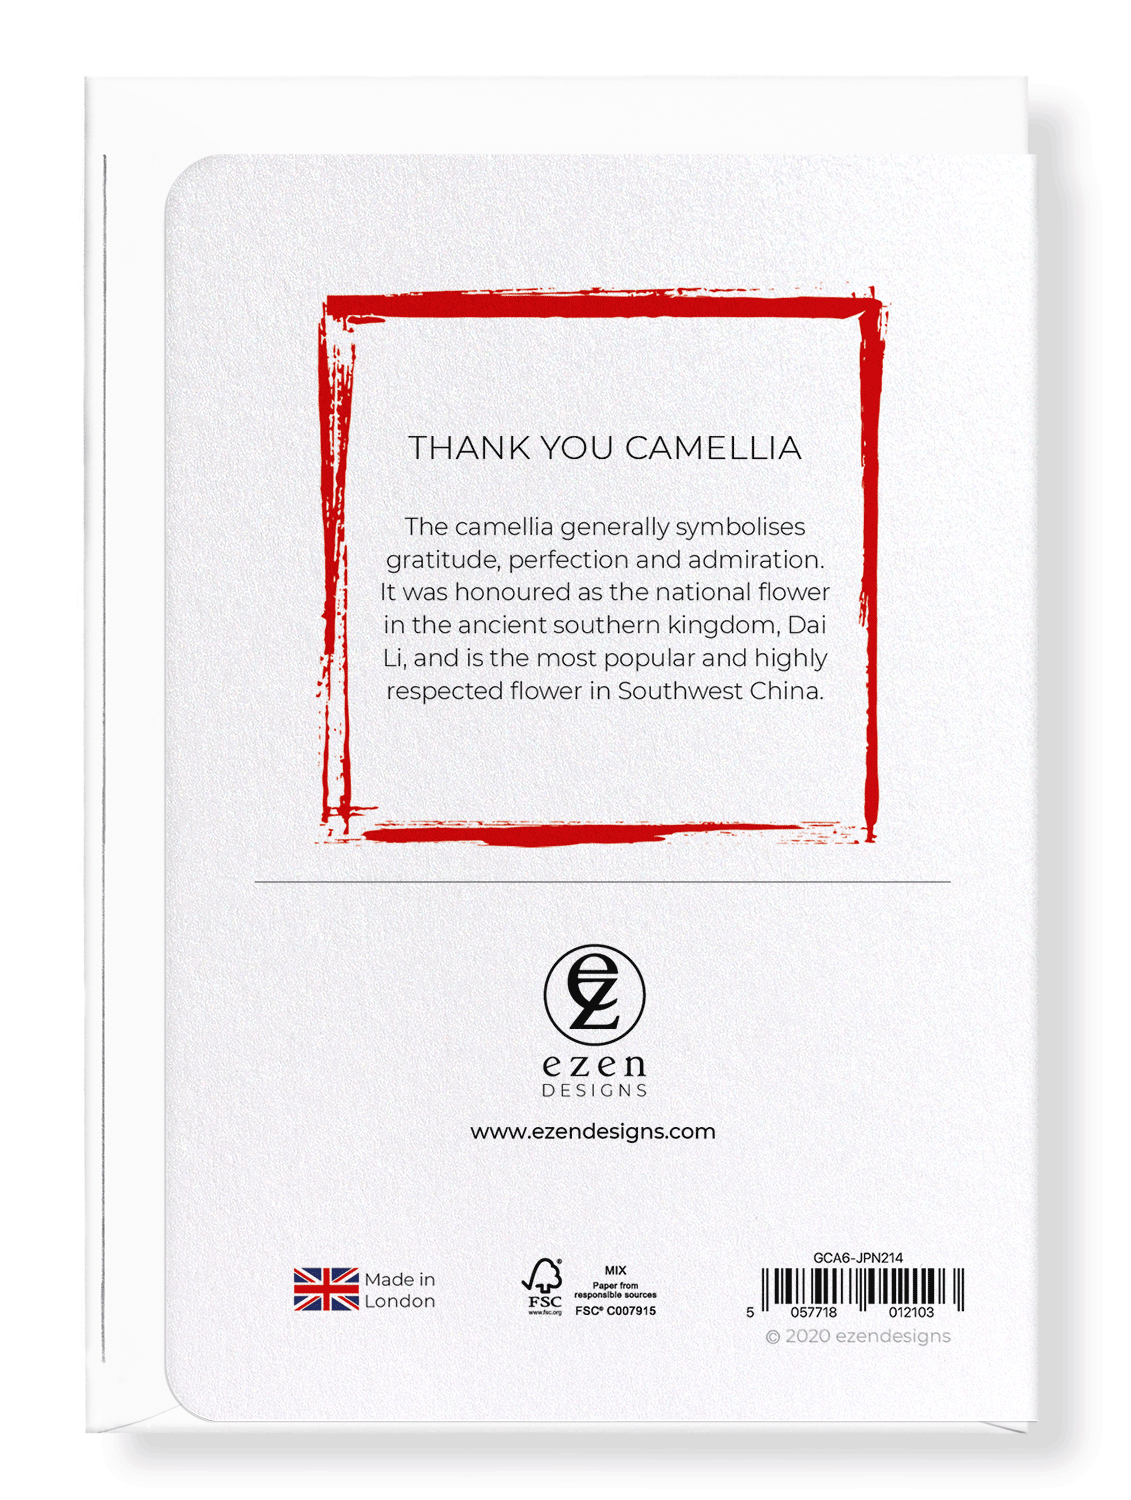 Ezen Designs - Thank you camellia - Greeting Card - Back